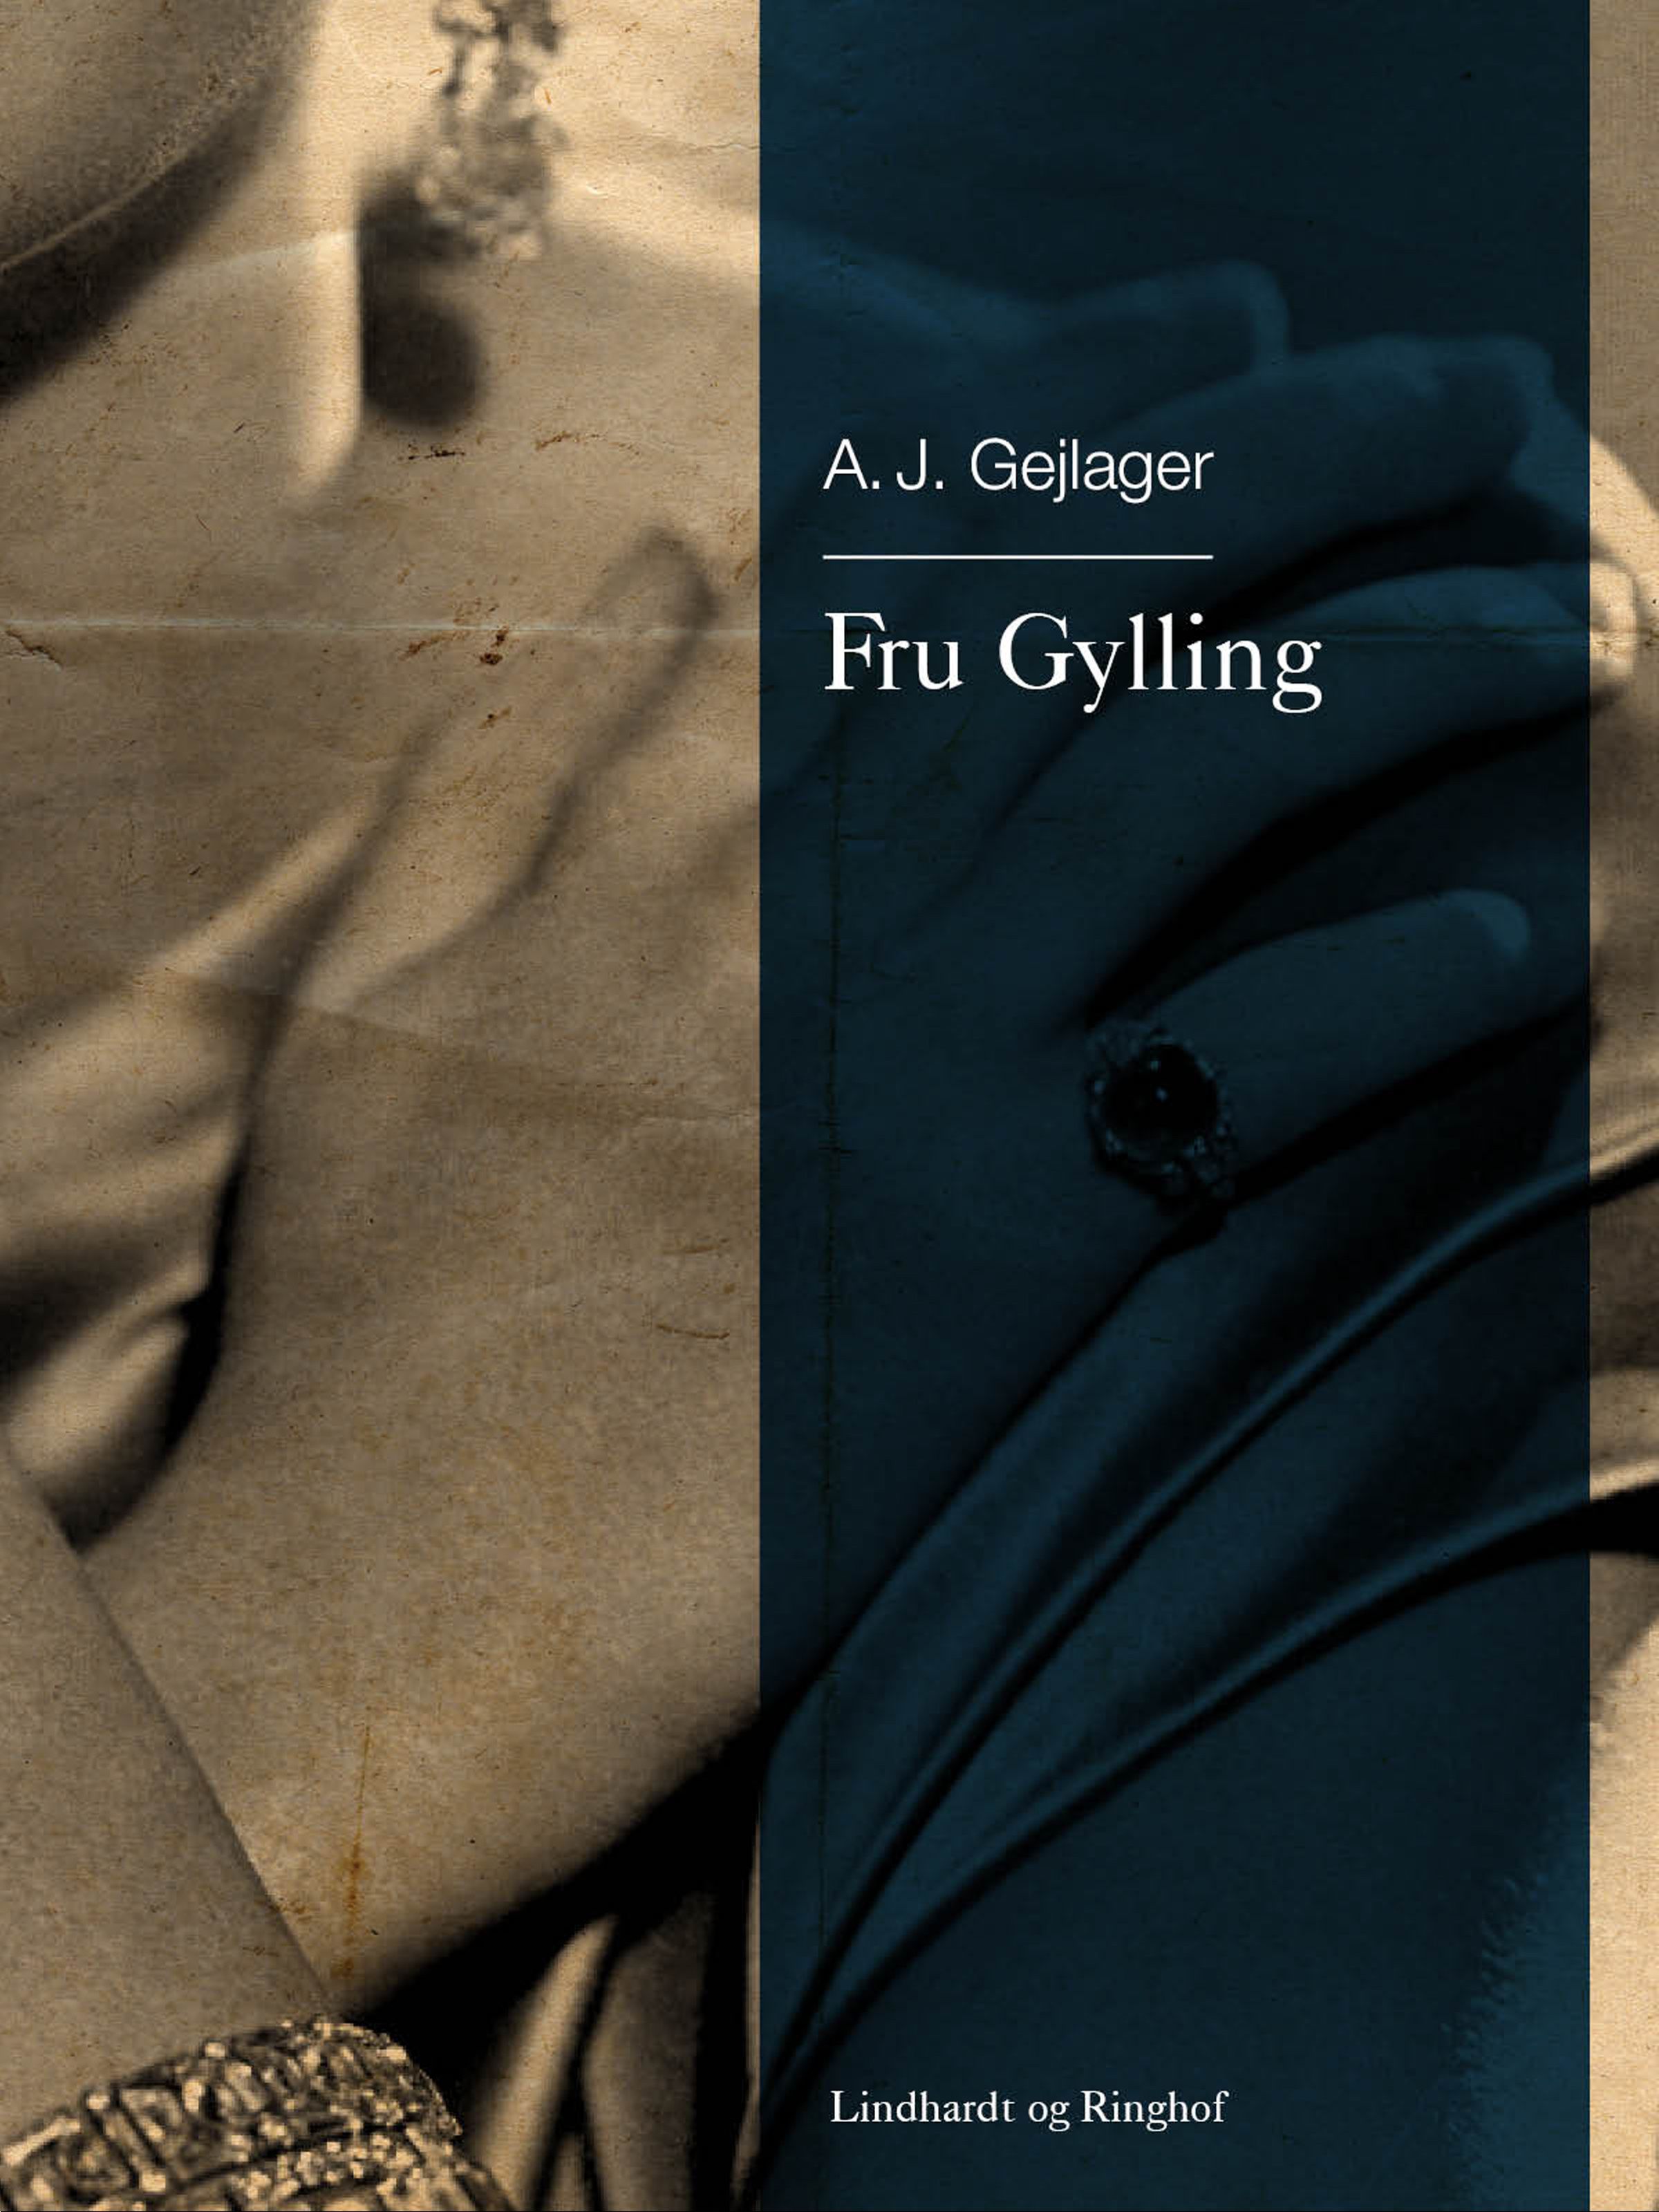 Fru Gylling, audiobook by A.J Gejlager